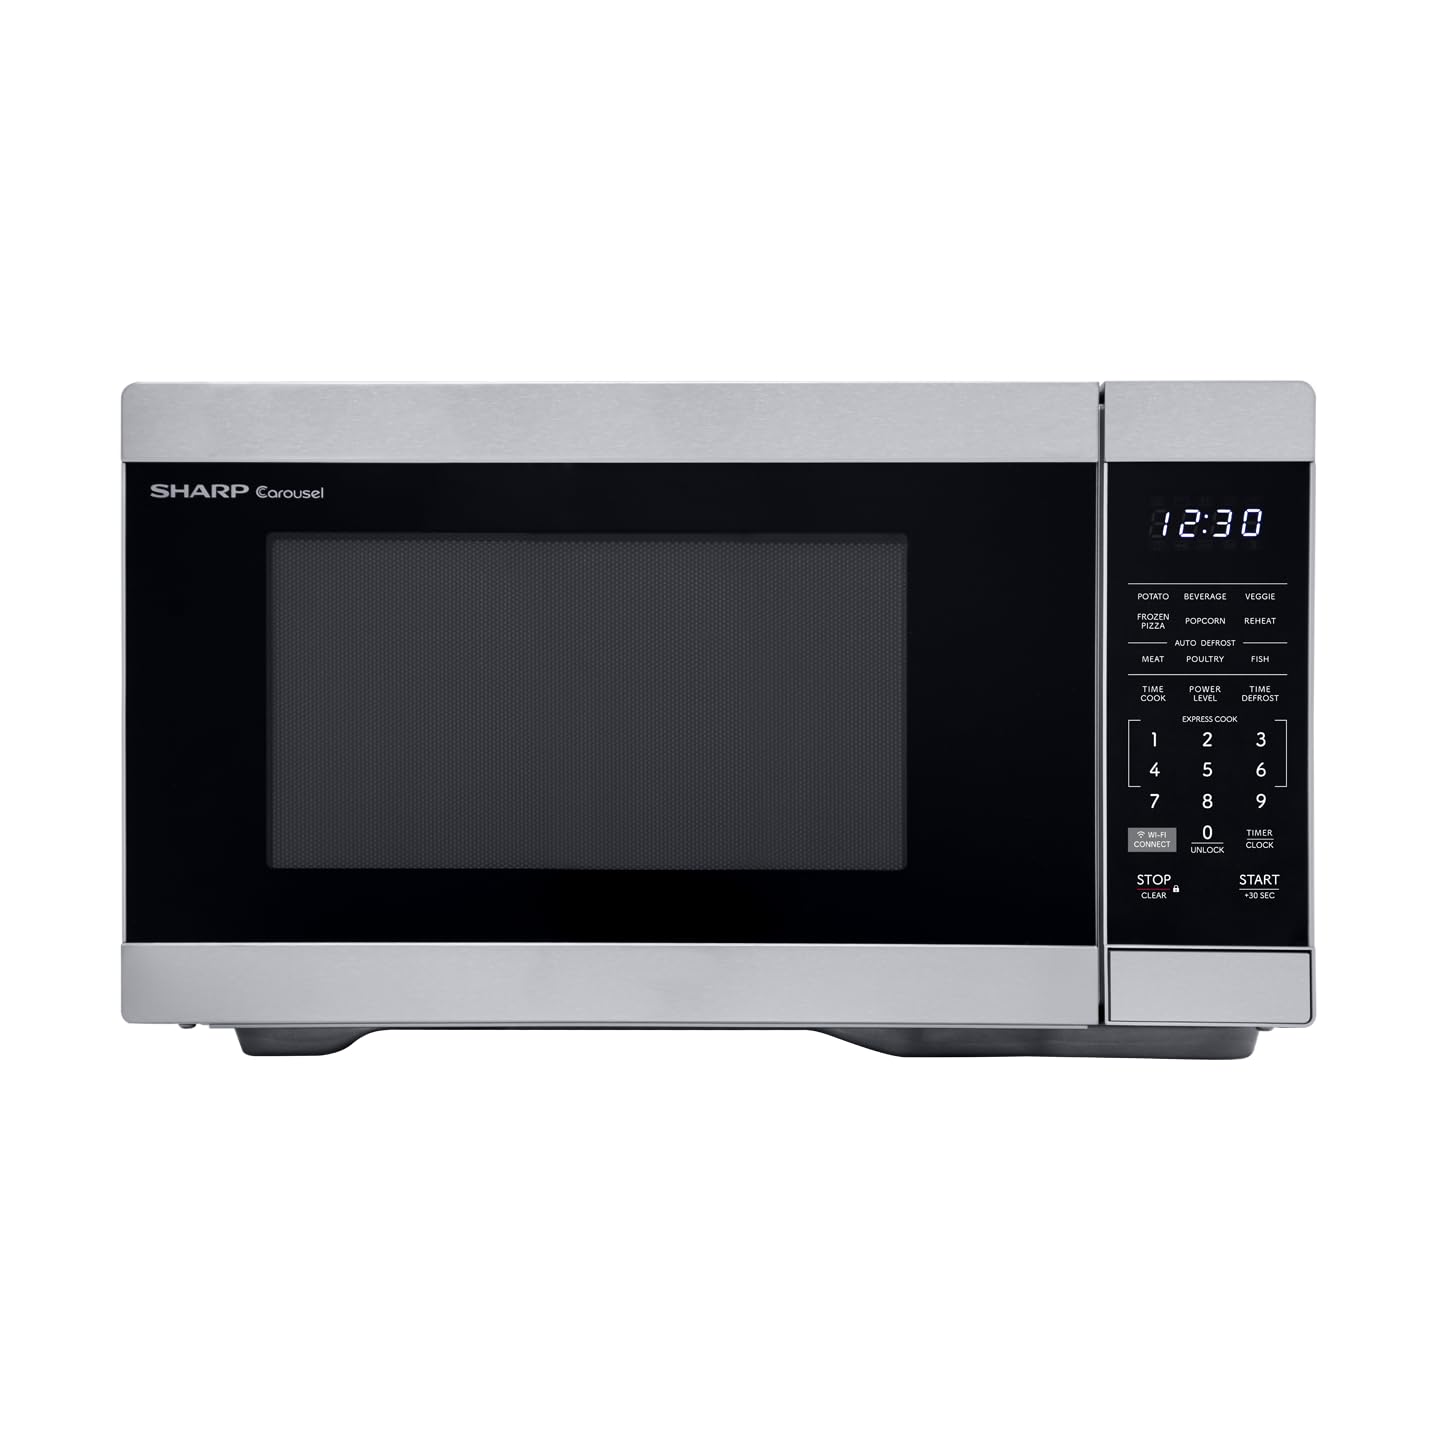 SHARP ZSMC1169KS Oven Countertop Microwave, 1.1 CuFt, Stainless Steel